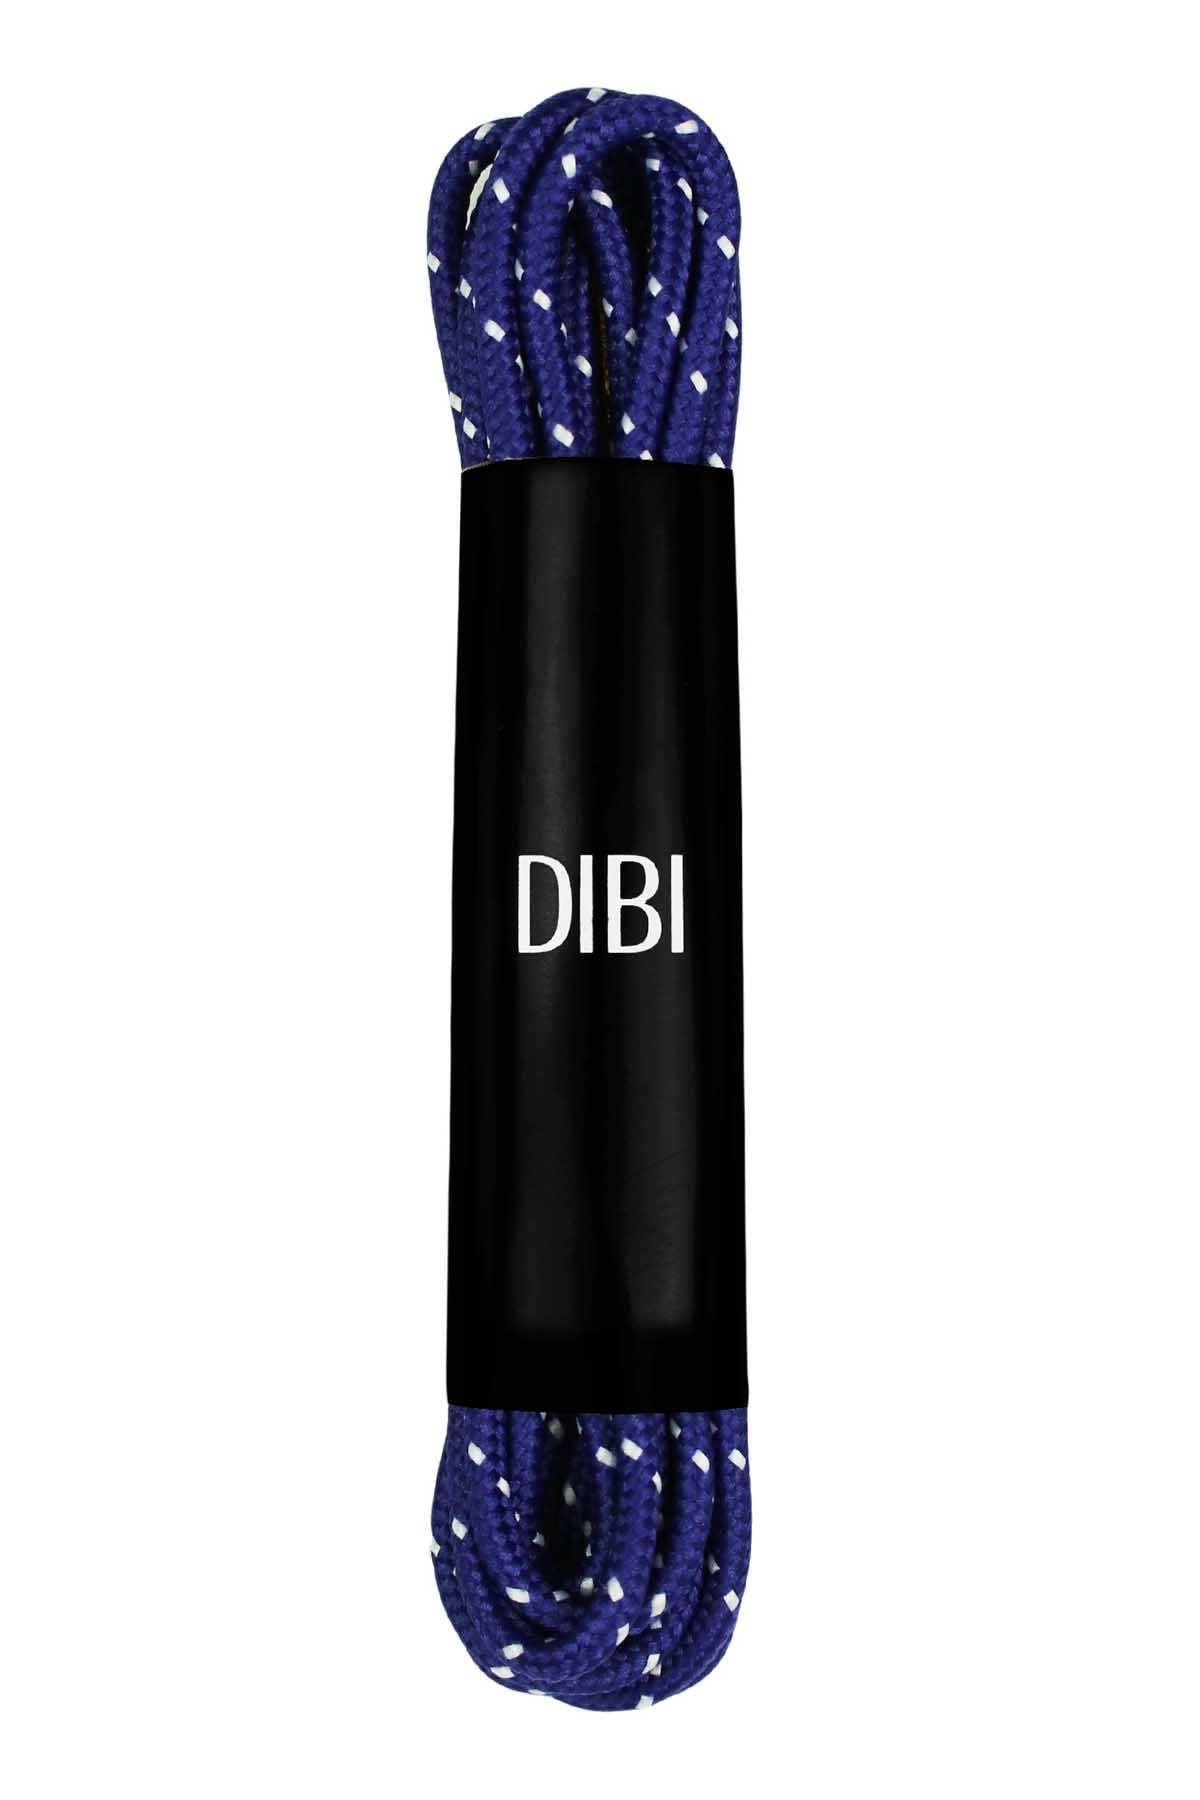 DIBI Navy-Blue Polkadot Dress Shoelaces w/ Gold Aglets